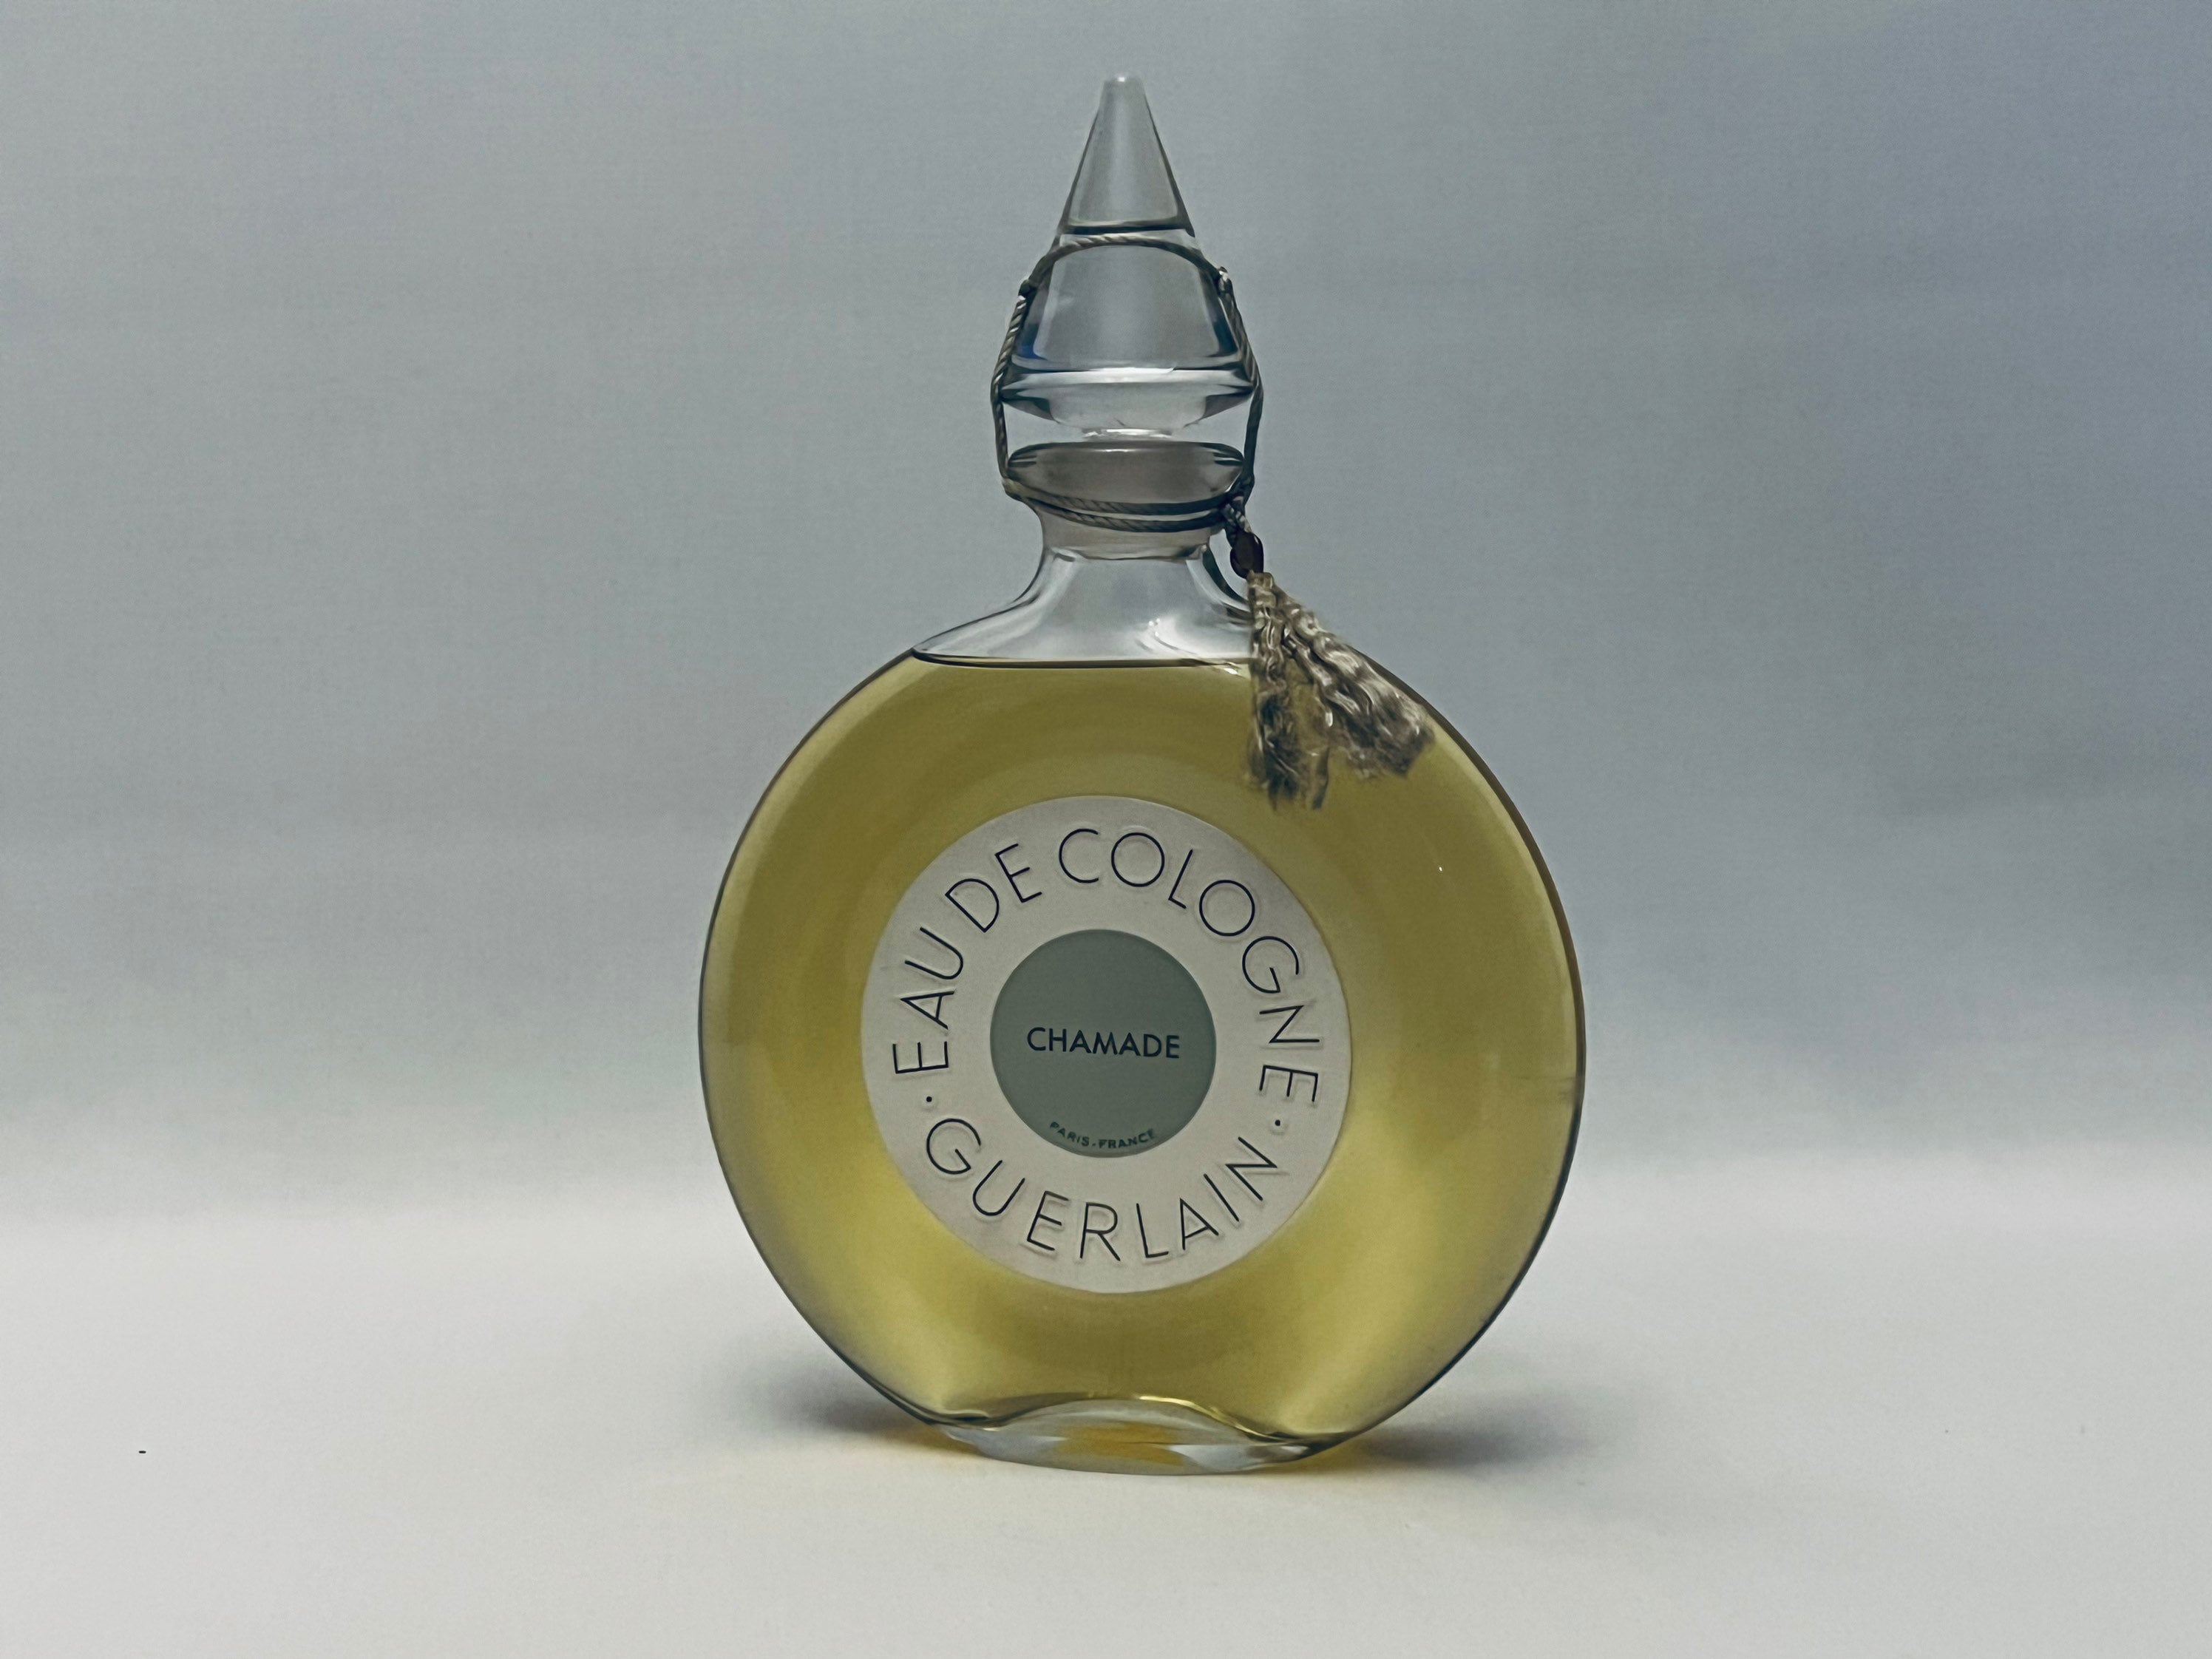 1969 Chanel No. 5 Perfume Cologne Bath Oil Bottles photo 2-page vintage  print ad